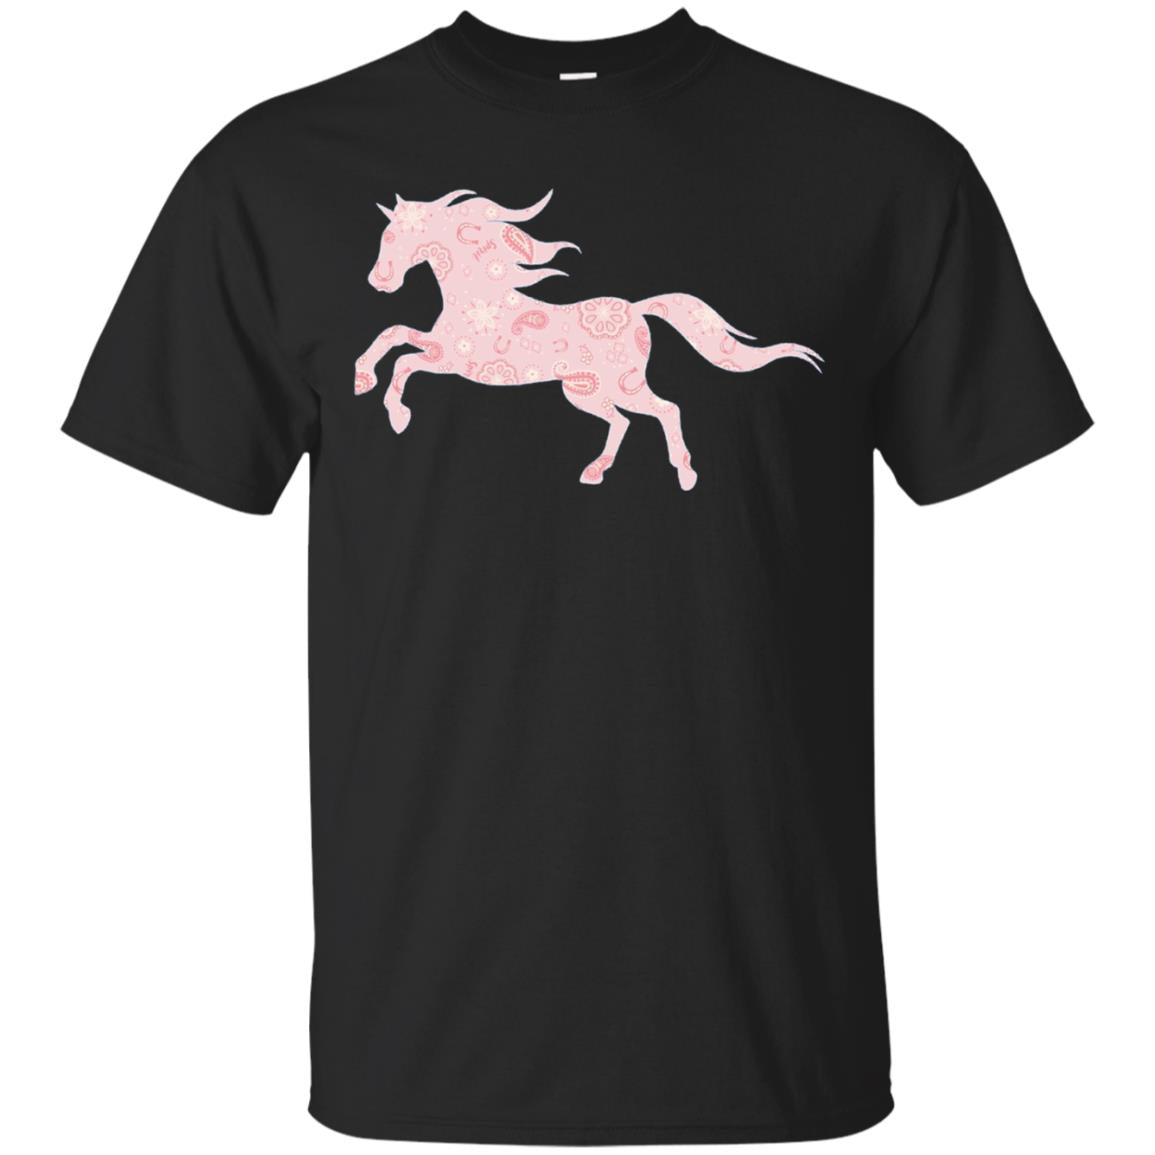  Dreamworks Spirit Riding Free Pink Horse T Shirt